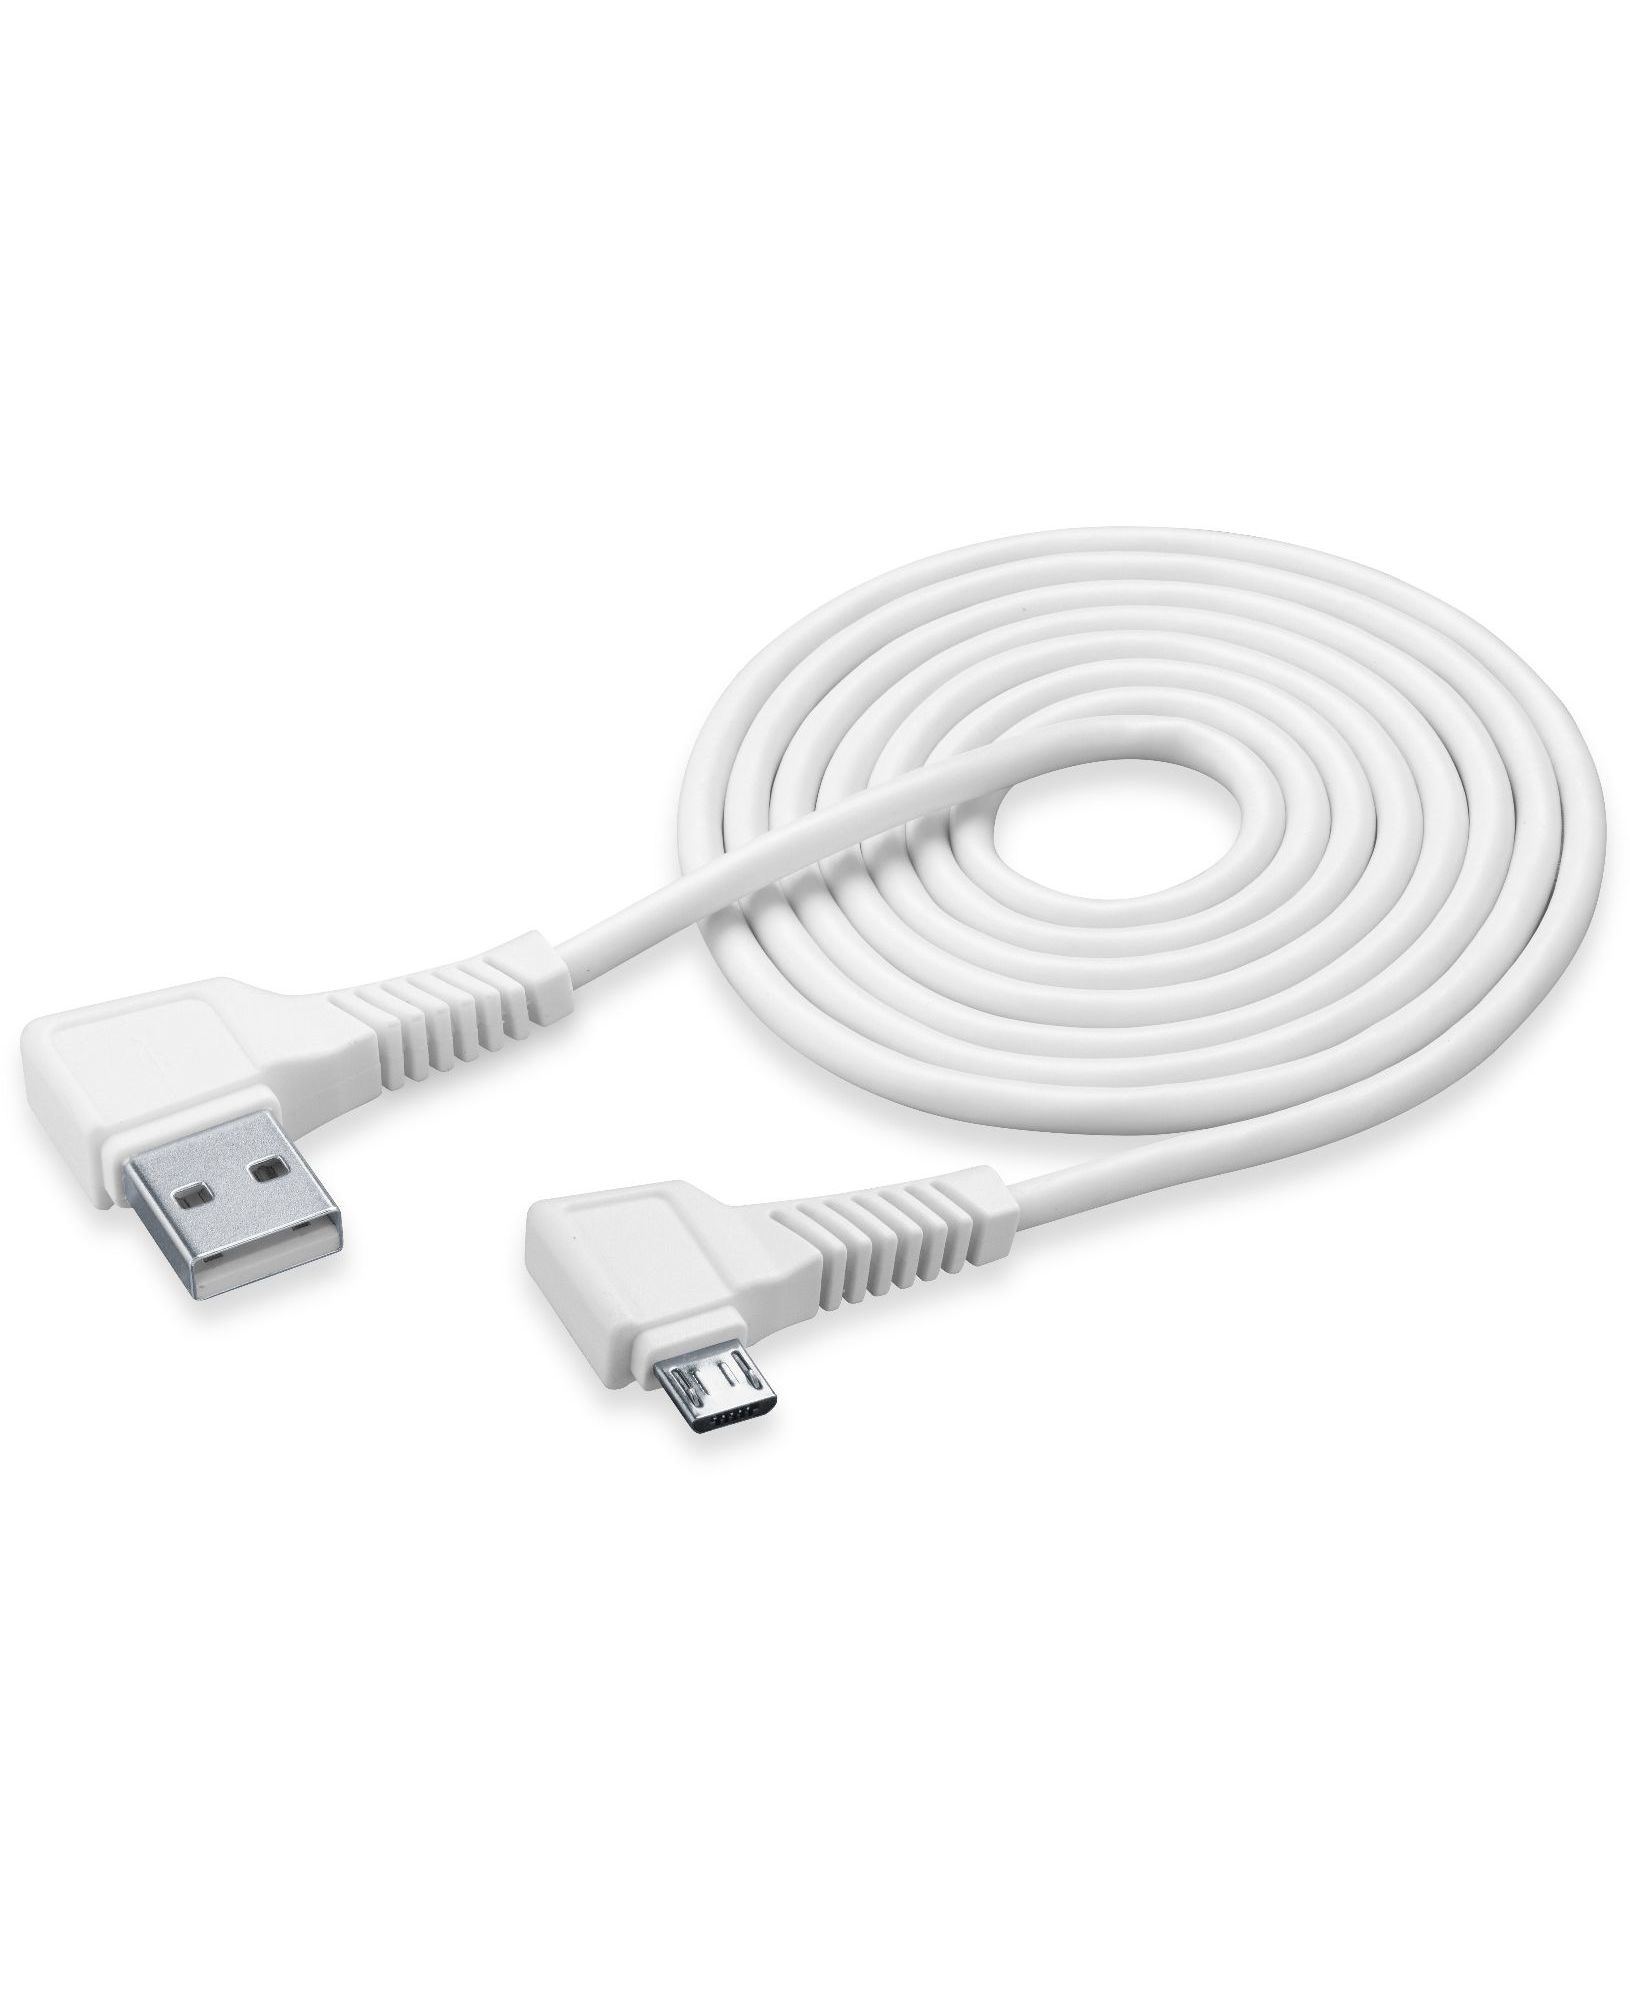 Usb cable, micro-usb square connector 2m, white